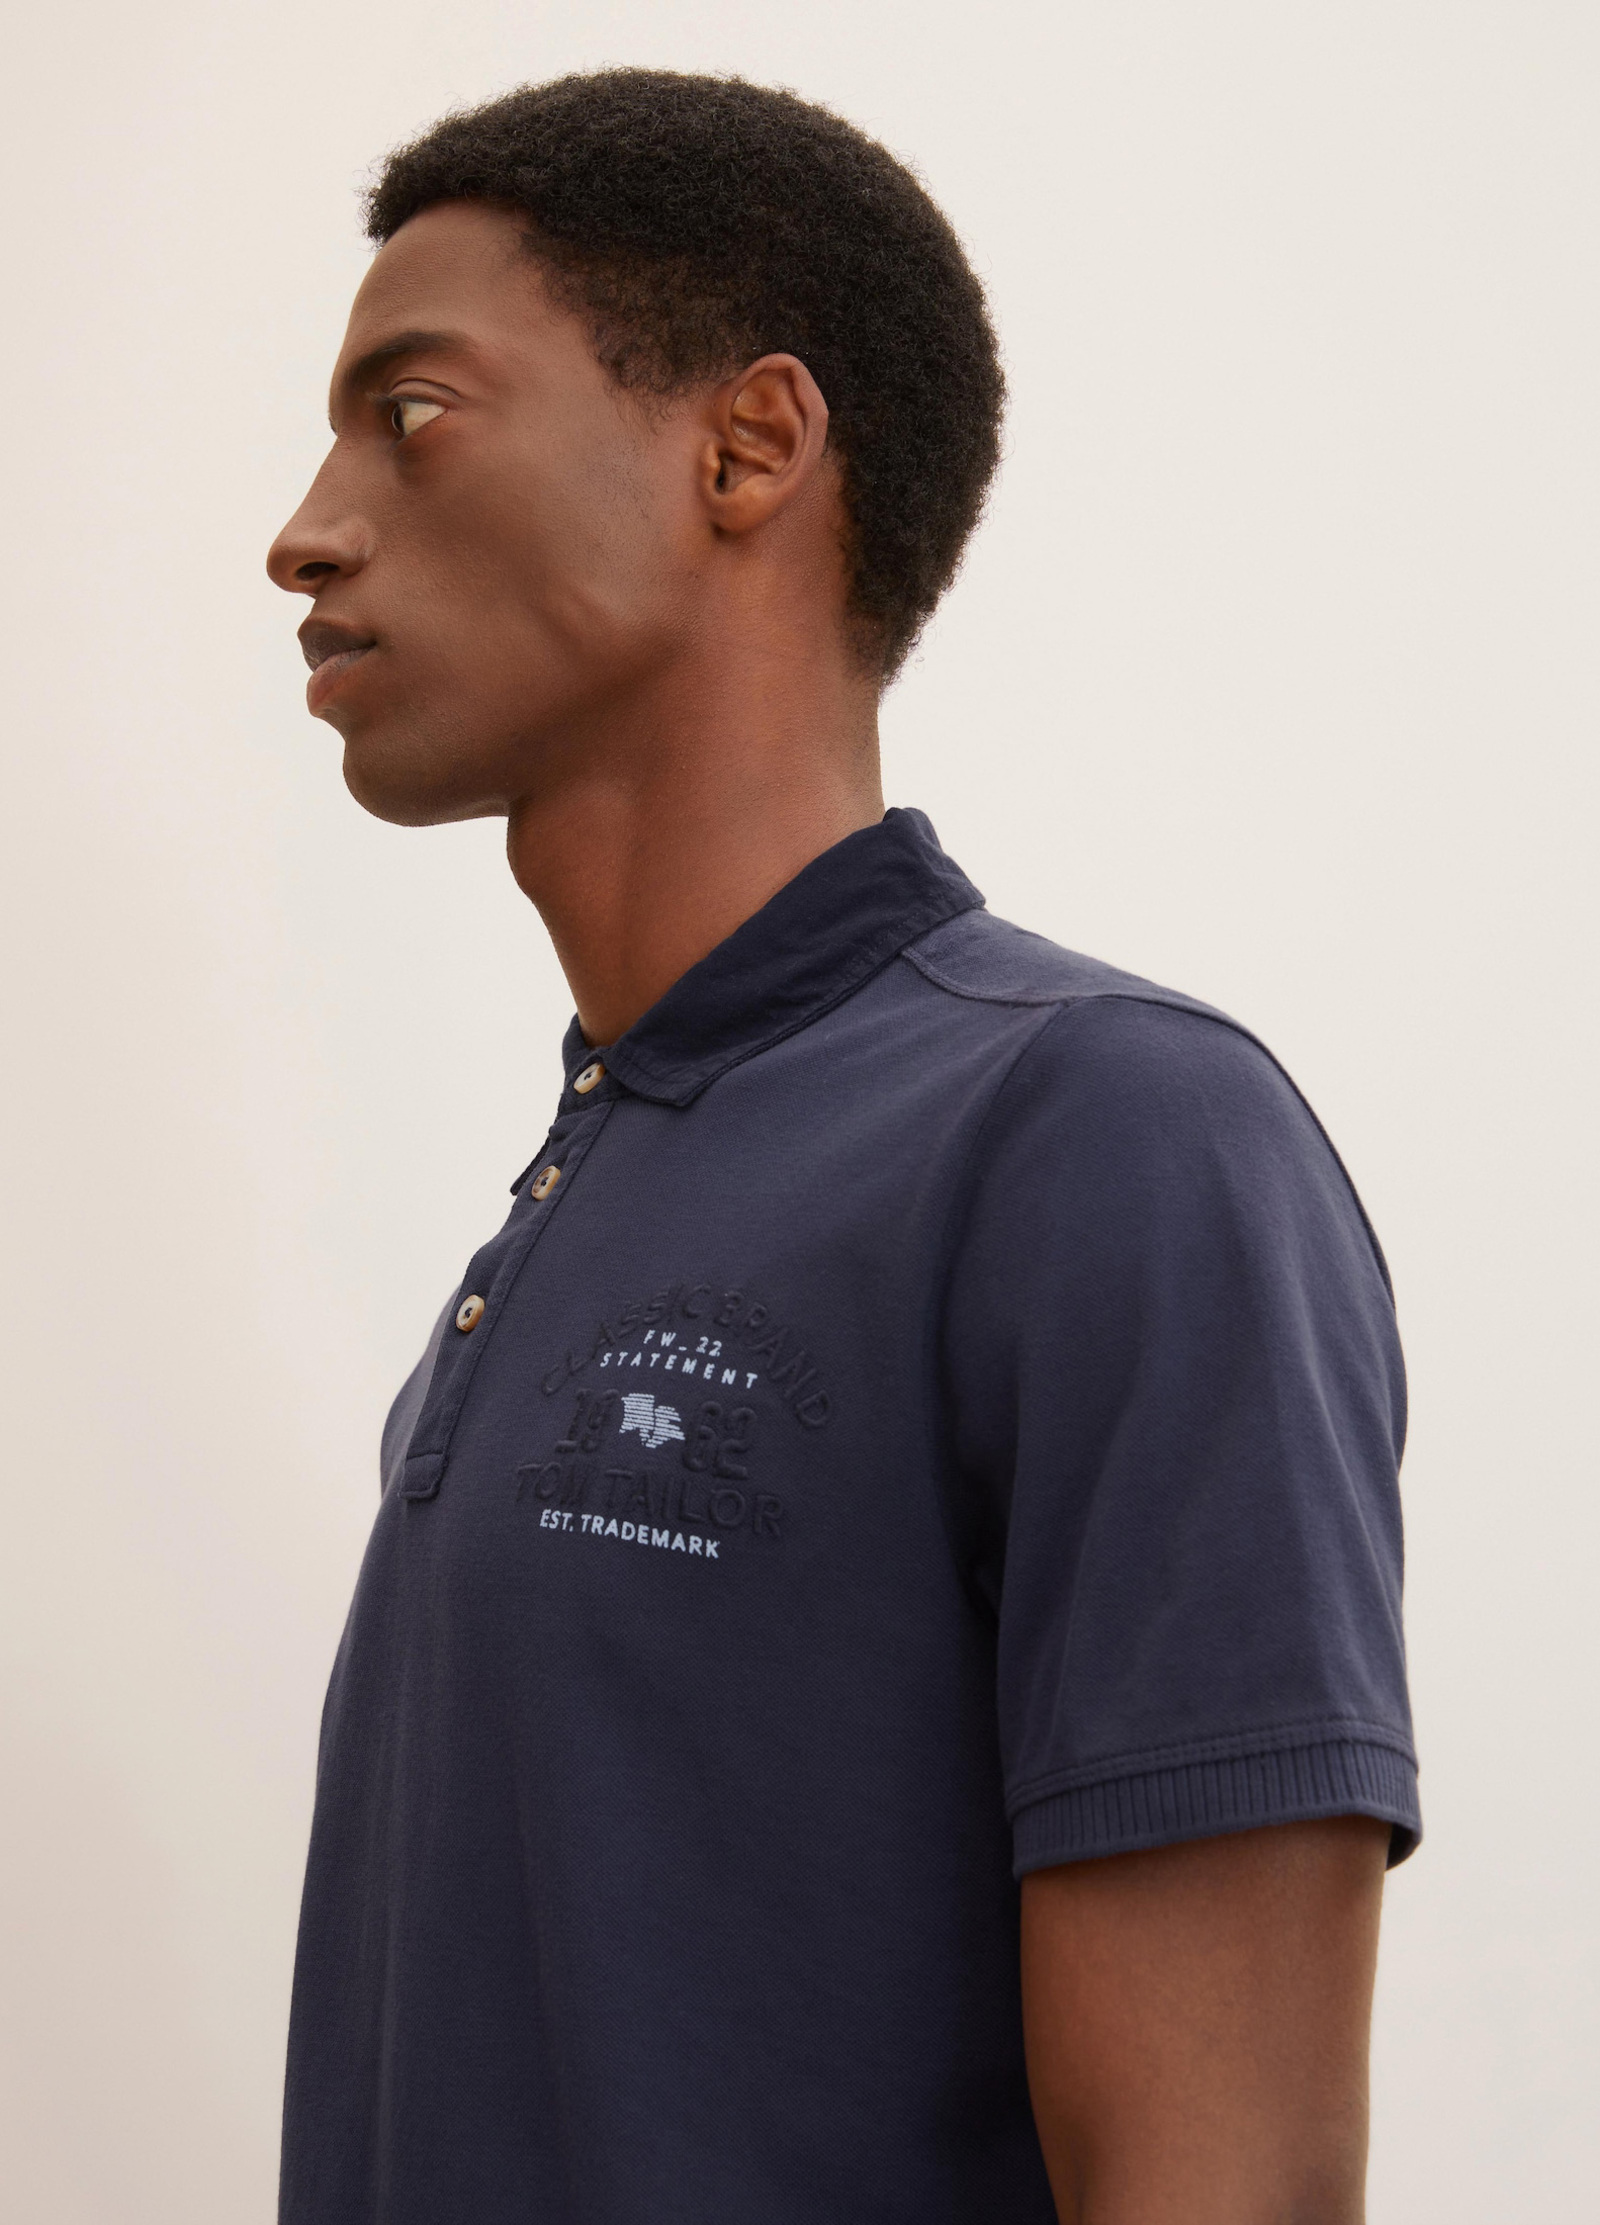 Tom Tailor Polo Shirt With Logo Embroidery Sky Captain Blue - 1032936-10668  Rozmiar L